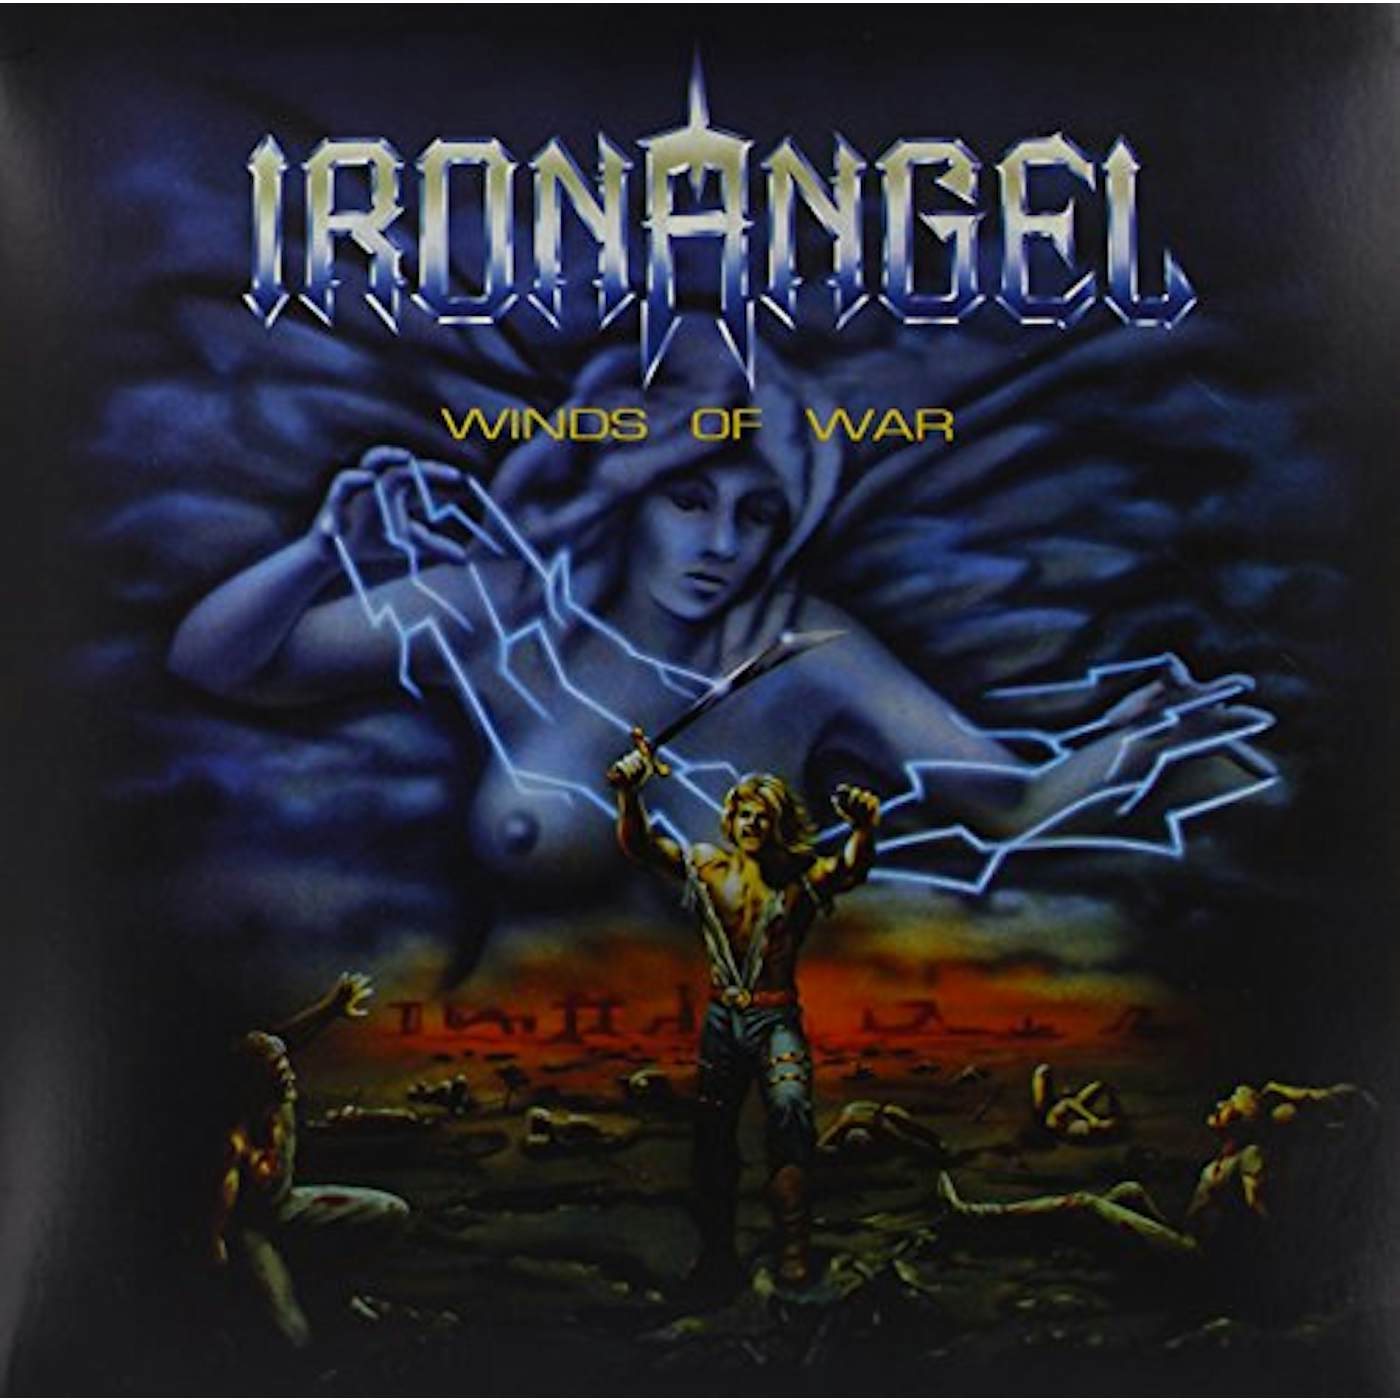 Iron Angel Winds of War Vinyl Record